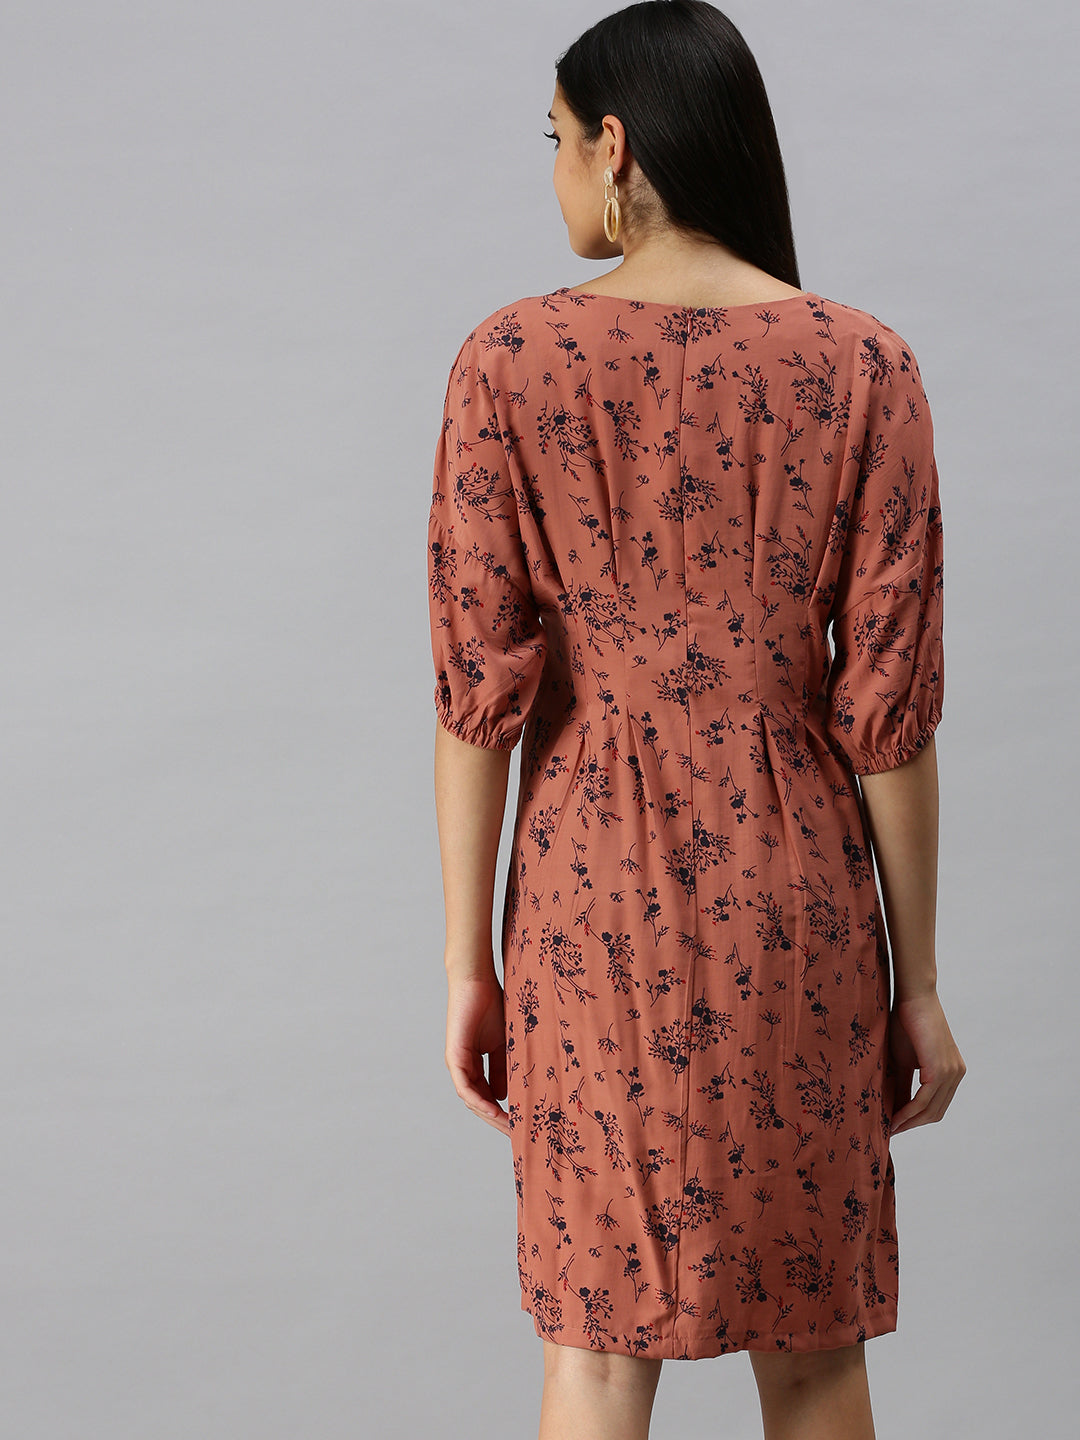 Women's A-Line Brown Printed Dress